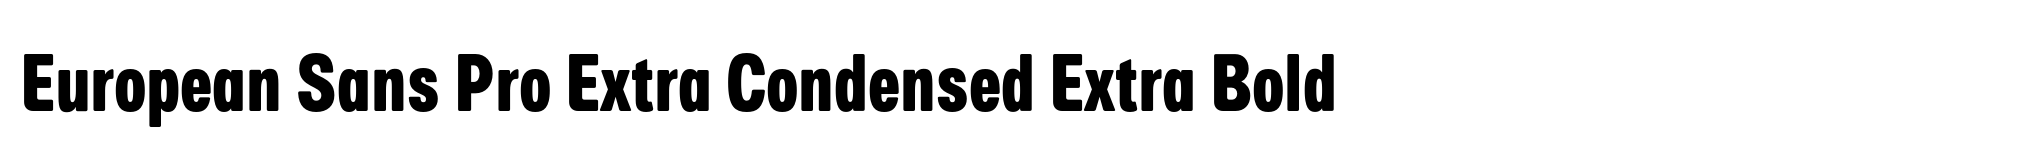 European Sans Pro Extra Condensed Extra Bold image